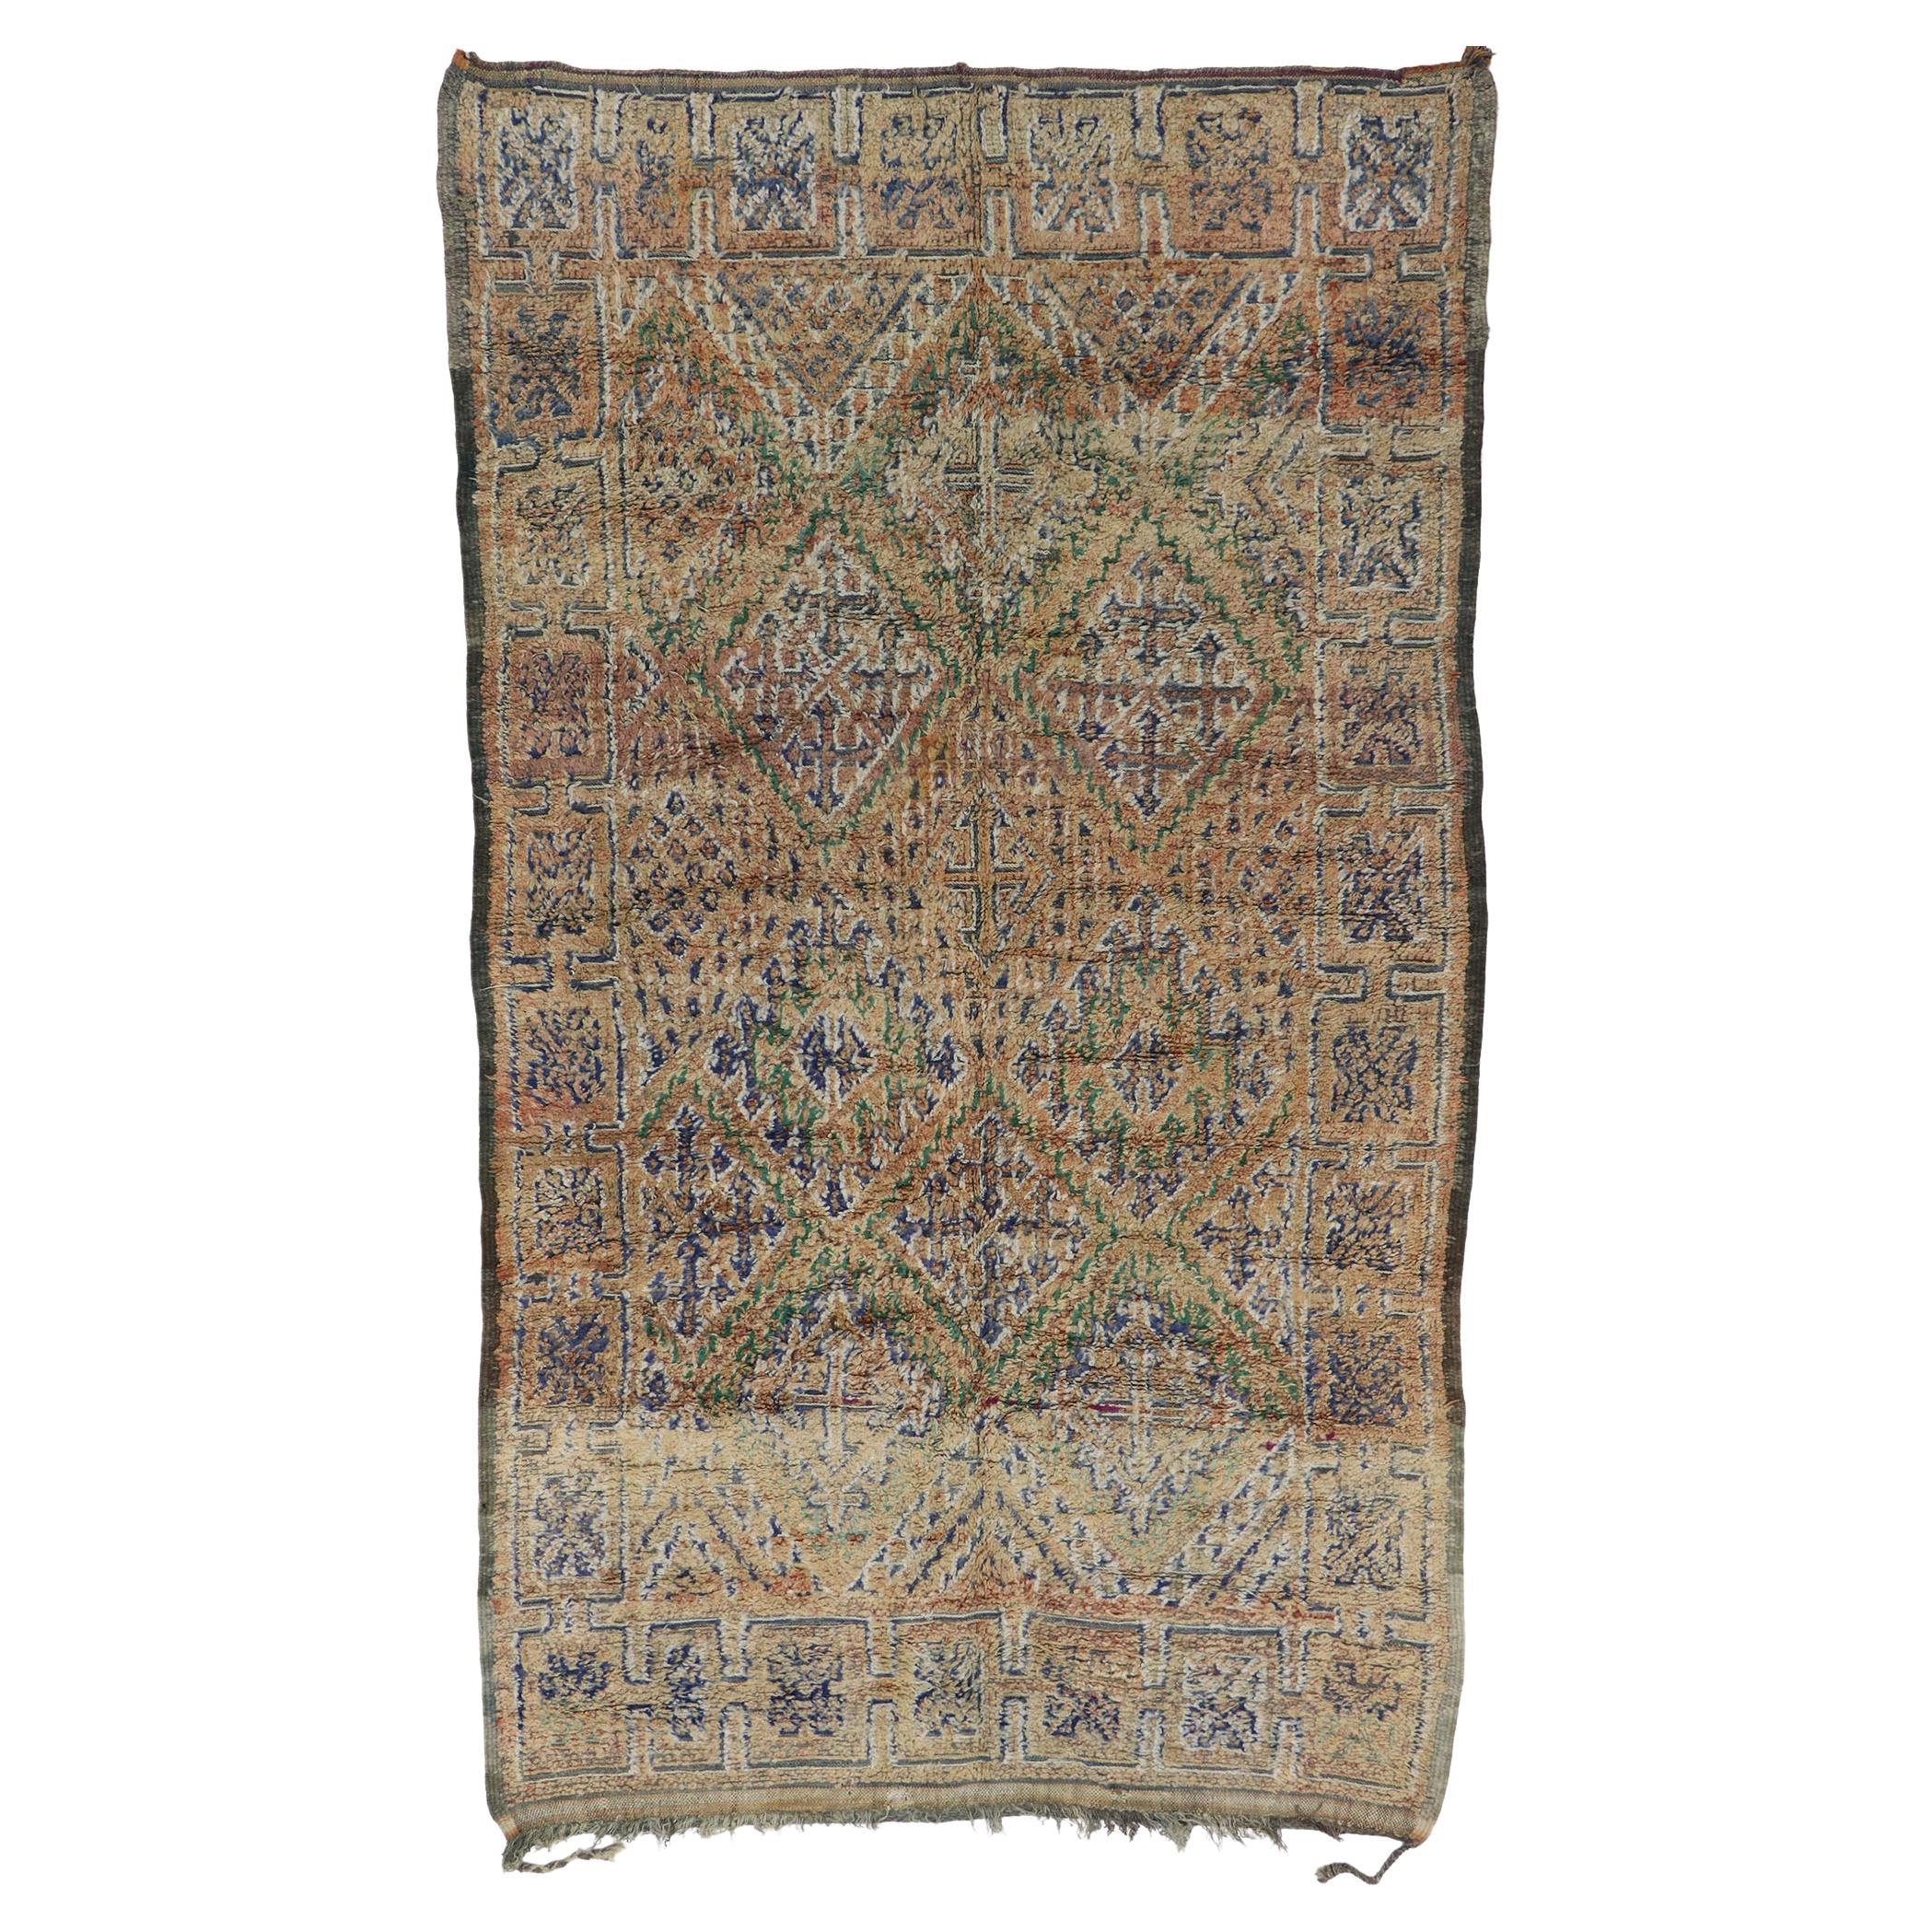 Marokkanischer Vintage-Teppich Beni MGuild, Nomadencharme trifft auf rustikale Eleganz im Angebot